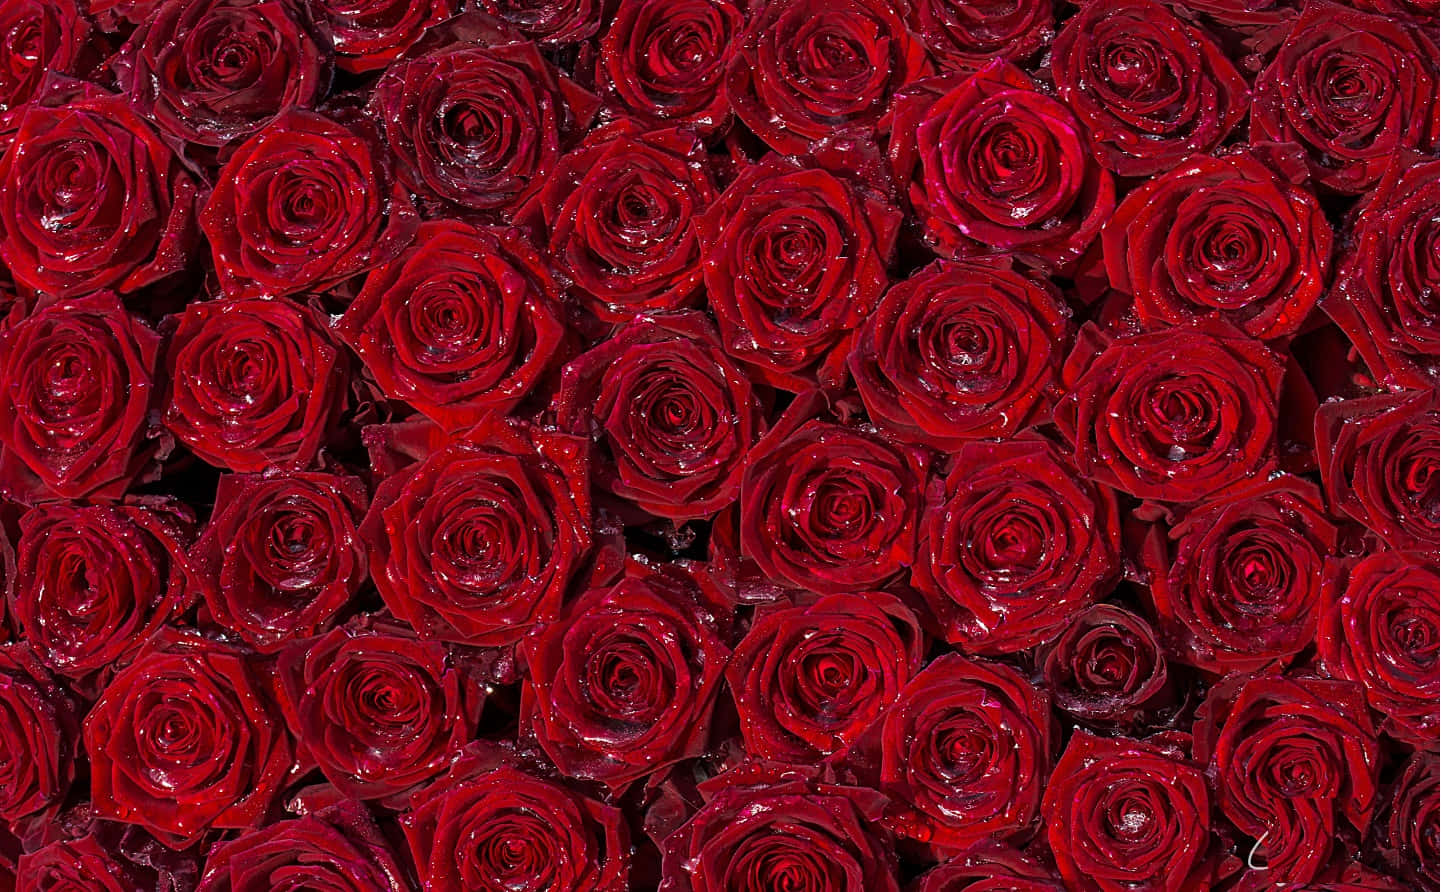 Imagenuna Rosa Roja Perfectamente Fotogénica.